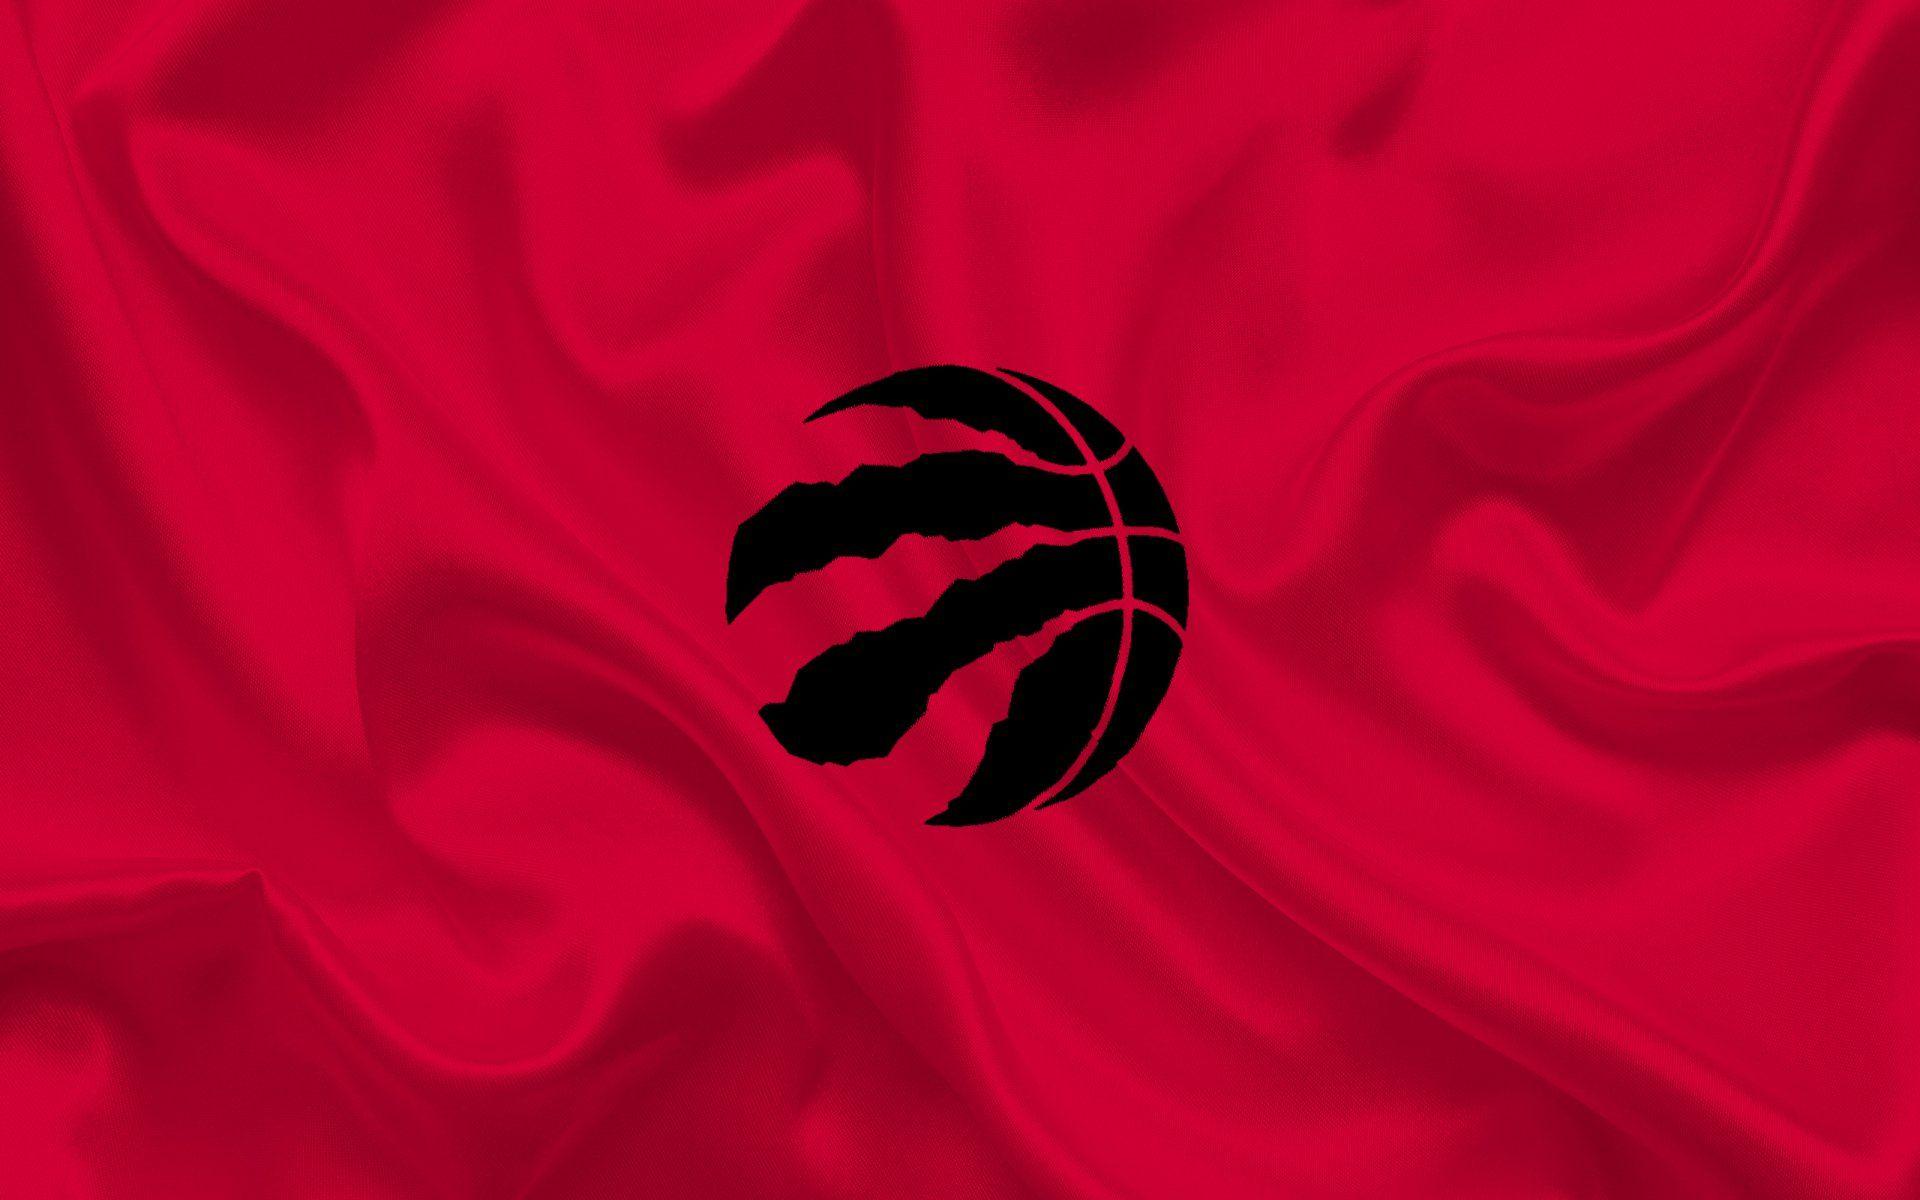 2019 NBA Champion Toronto Raptors Wallpaper by Lancetastic27 on DeviantArt